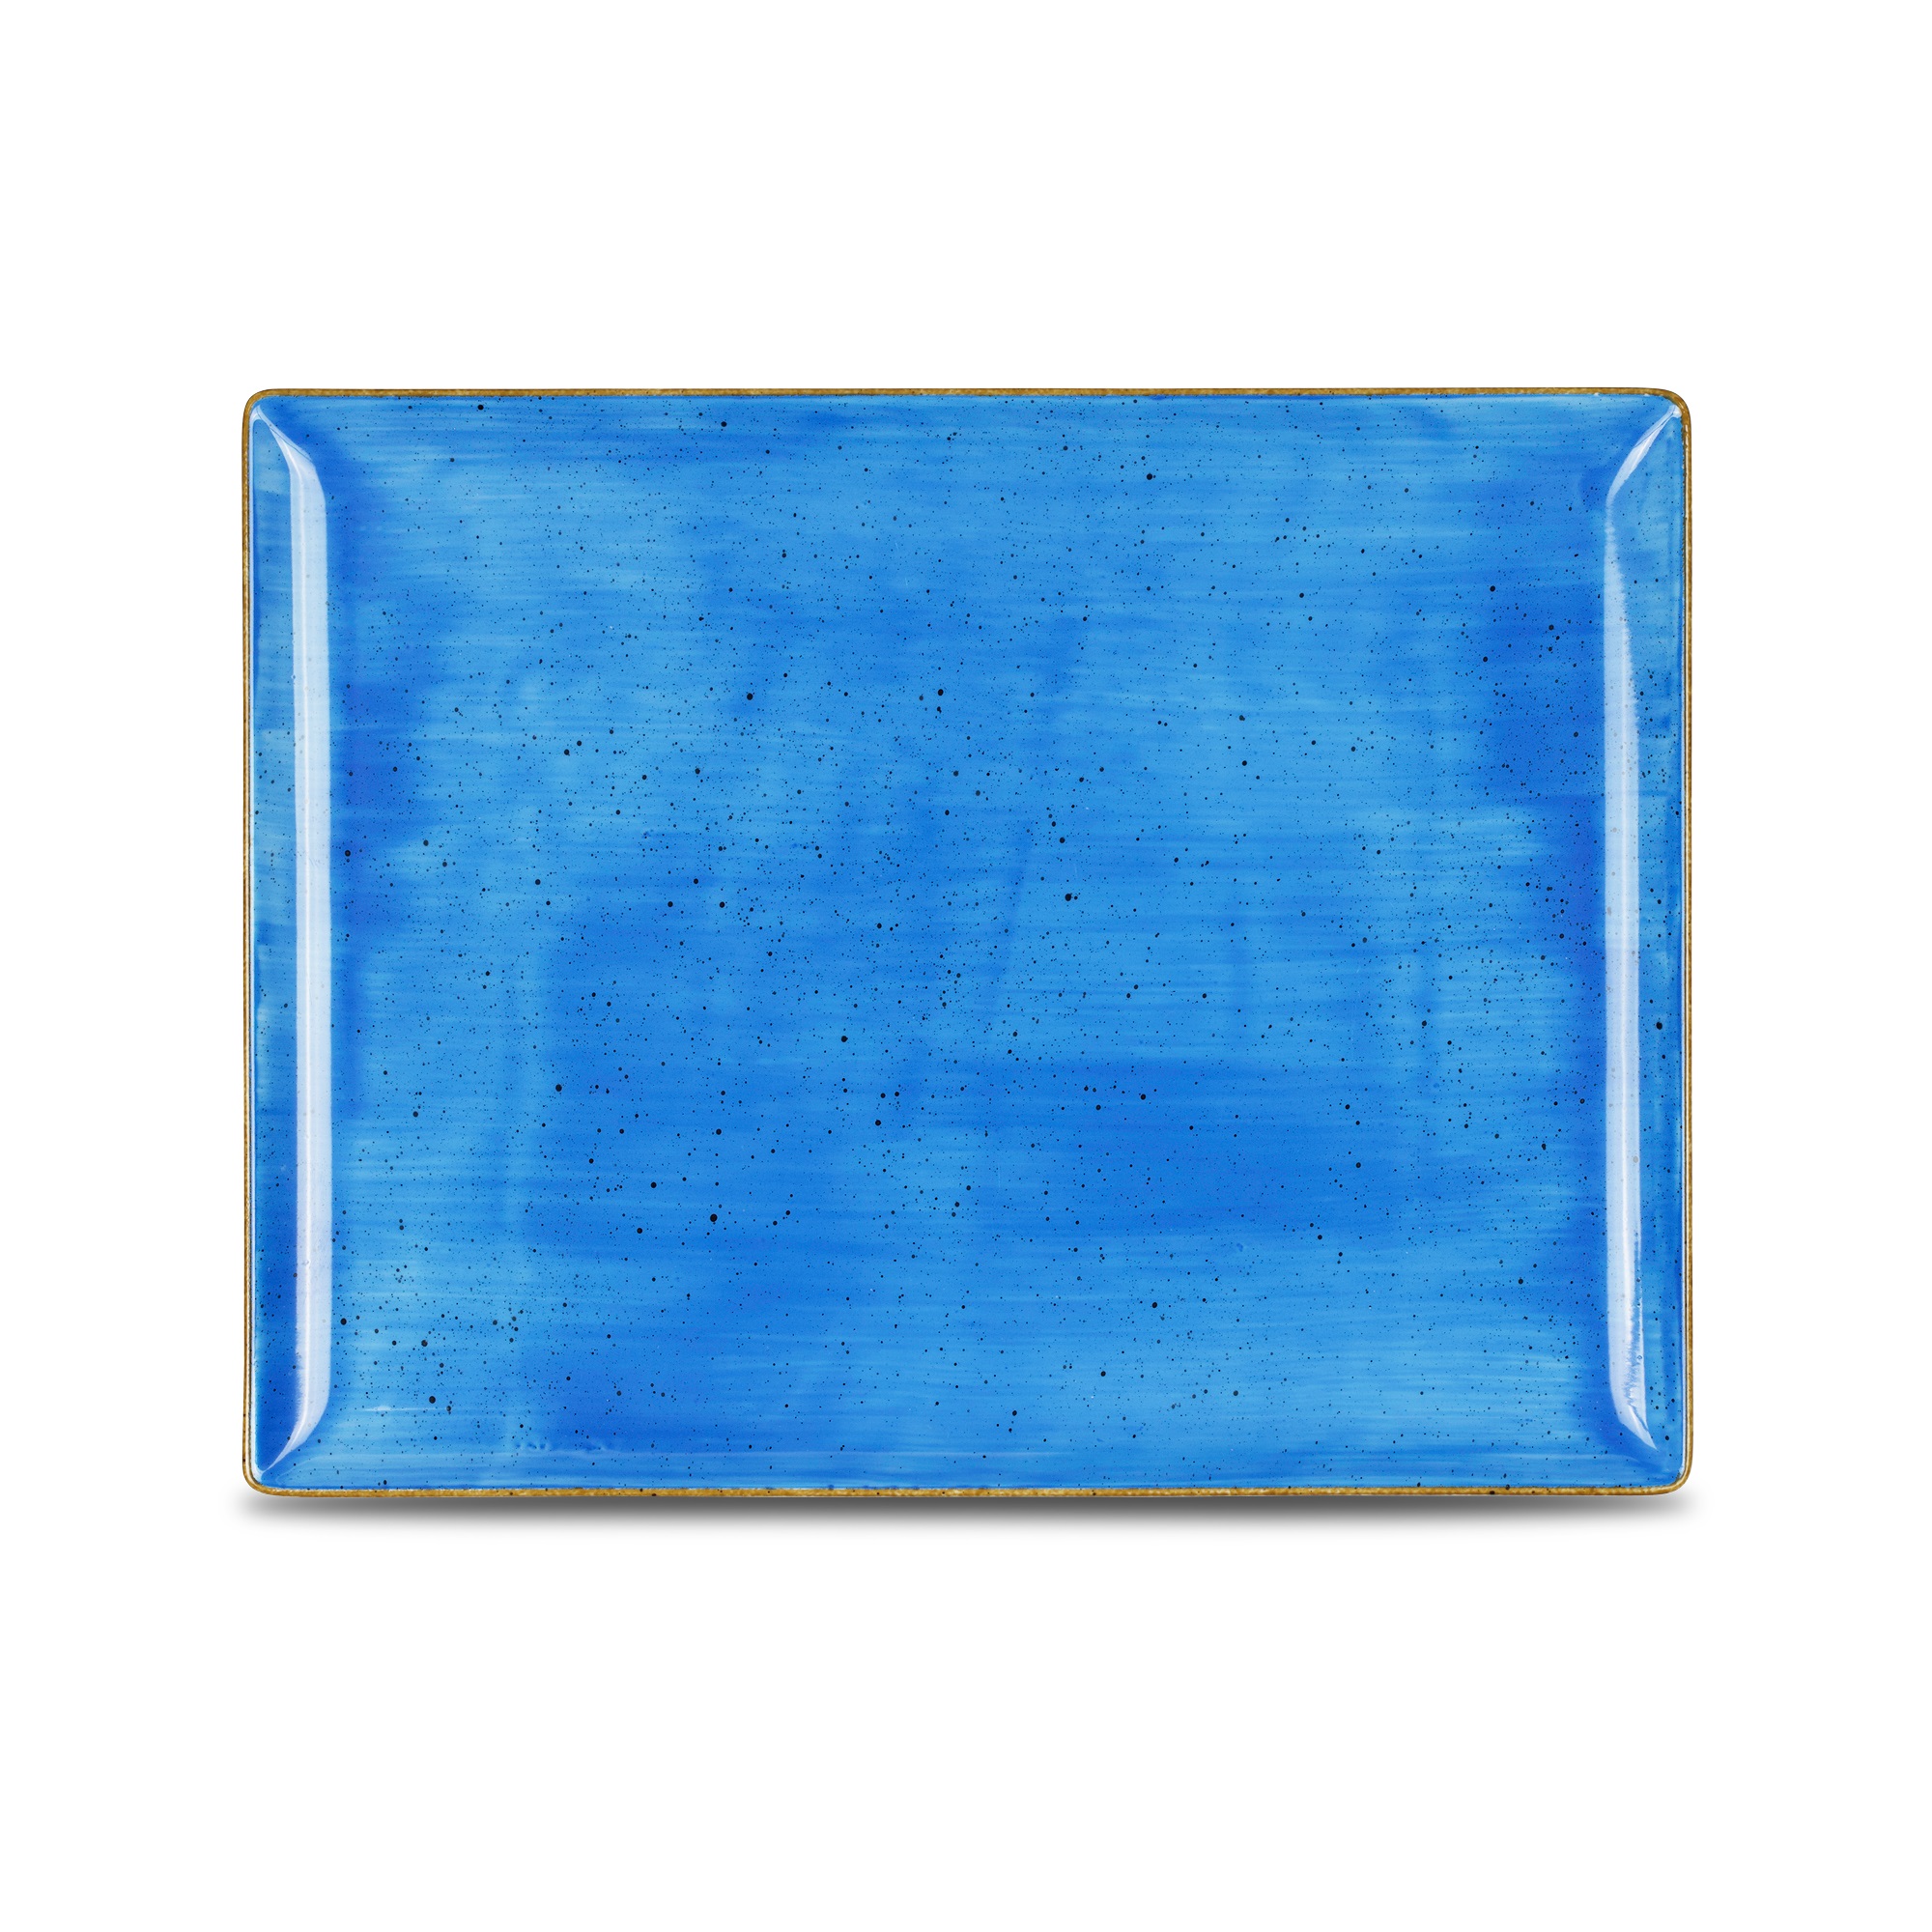 Platte eckig 31x24cm CLASSIC wave blue